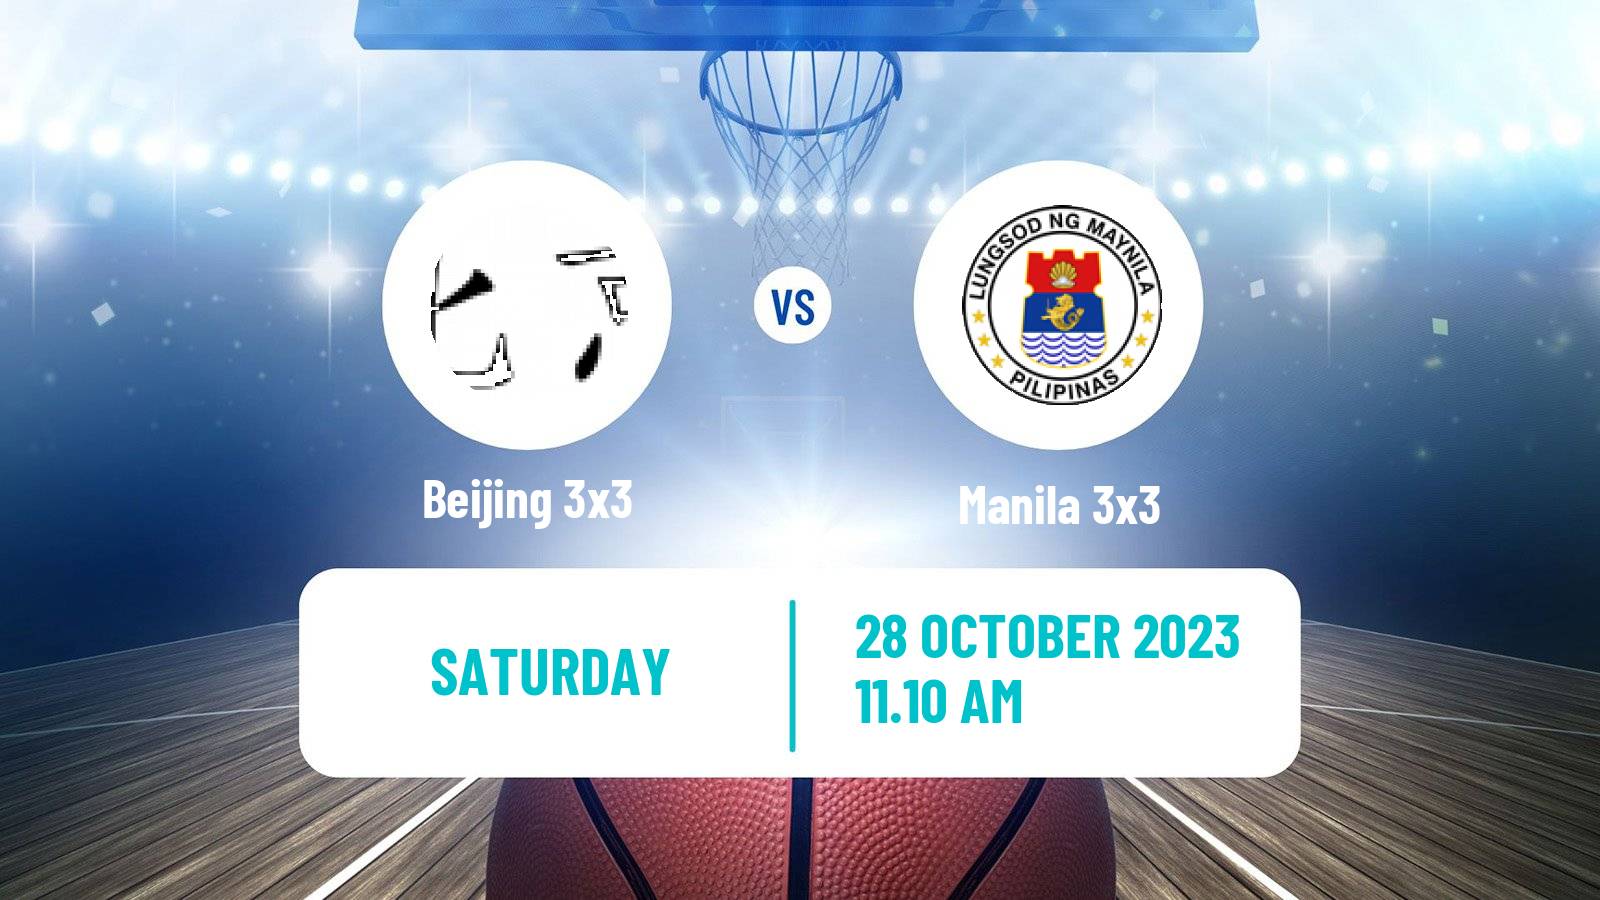 Basketball World Tour Abu Dhabi 3x3 Beijing 3x3 - Manila 3x3